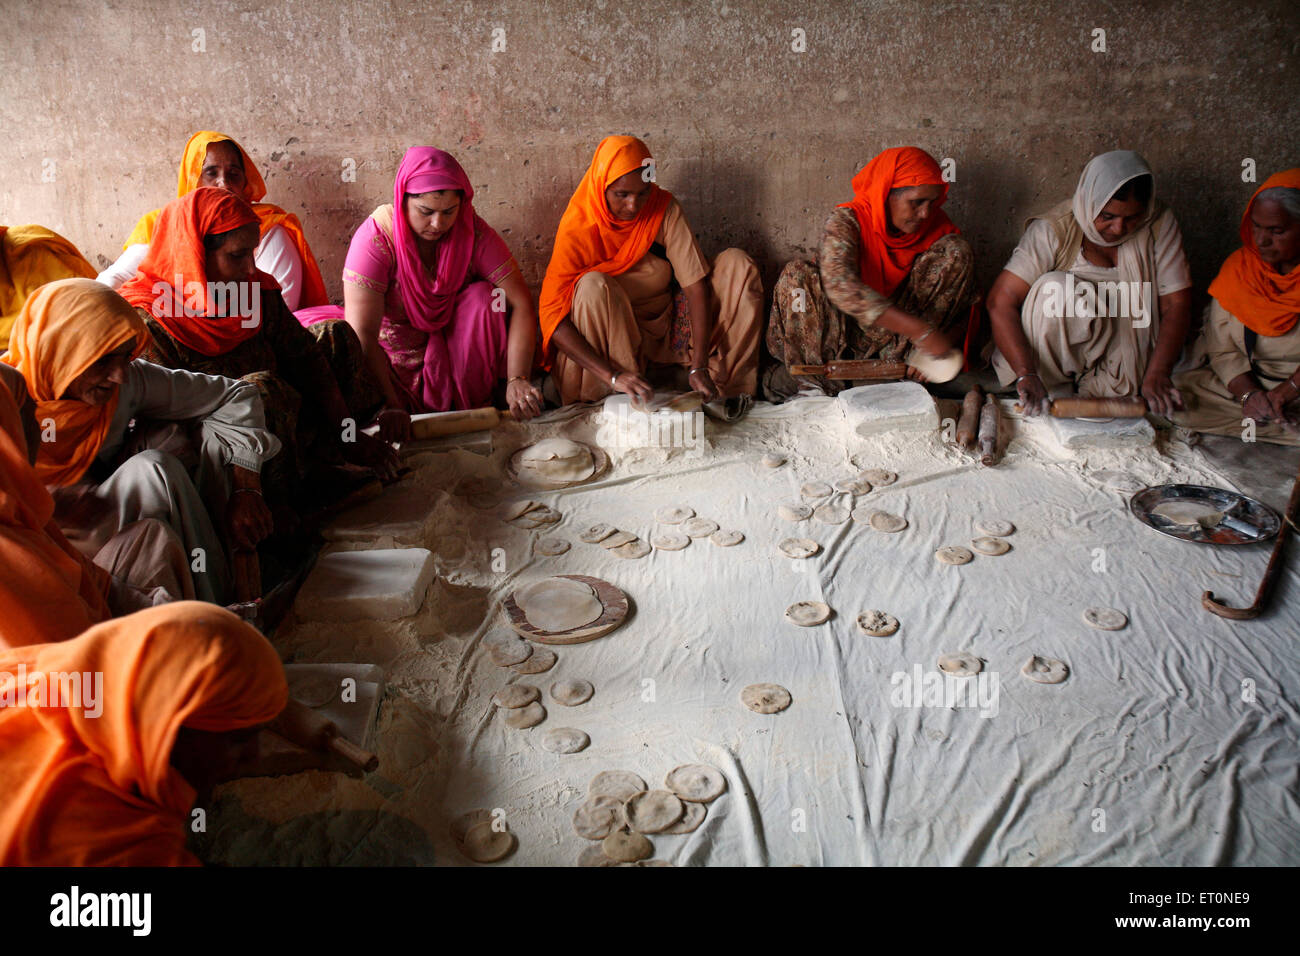 Women making bread, community kitchen, Golden Temple, Sri Harmandir Sahib, Amritsar, Punjab, India Stock Photo